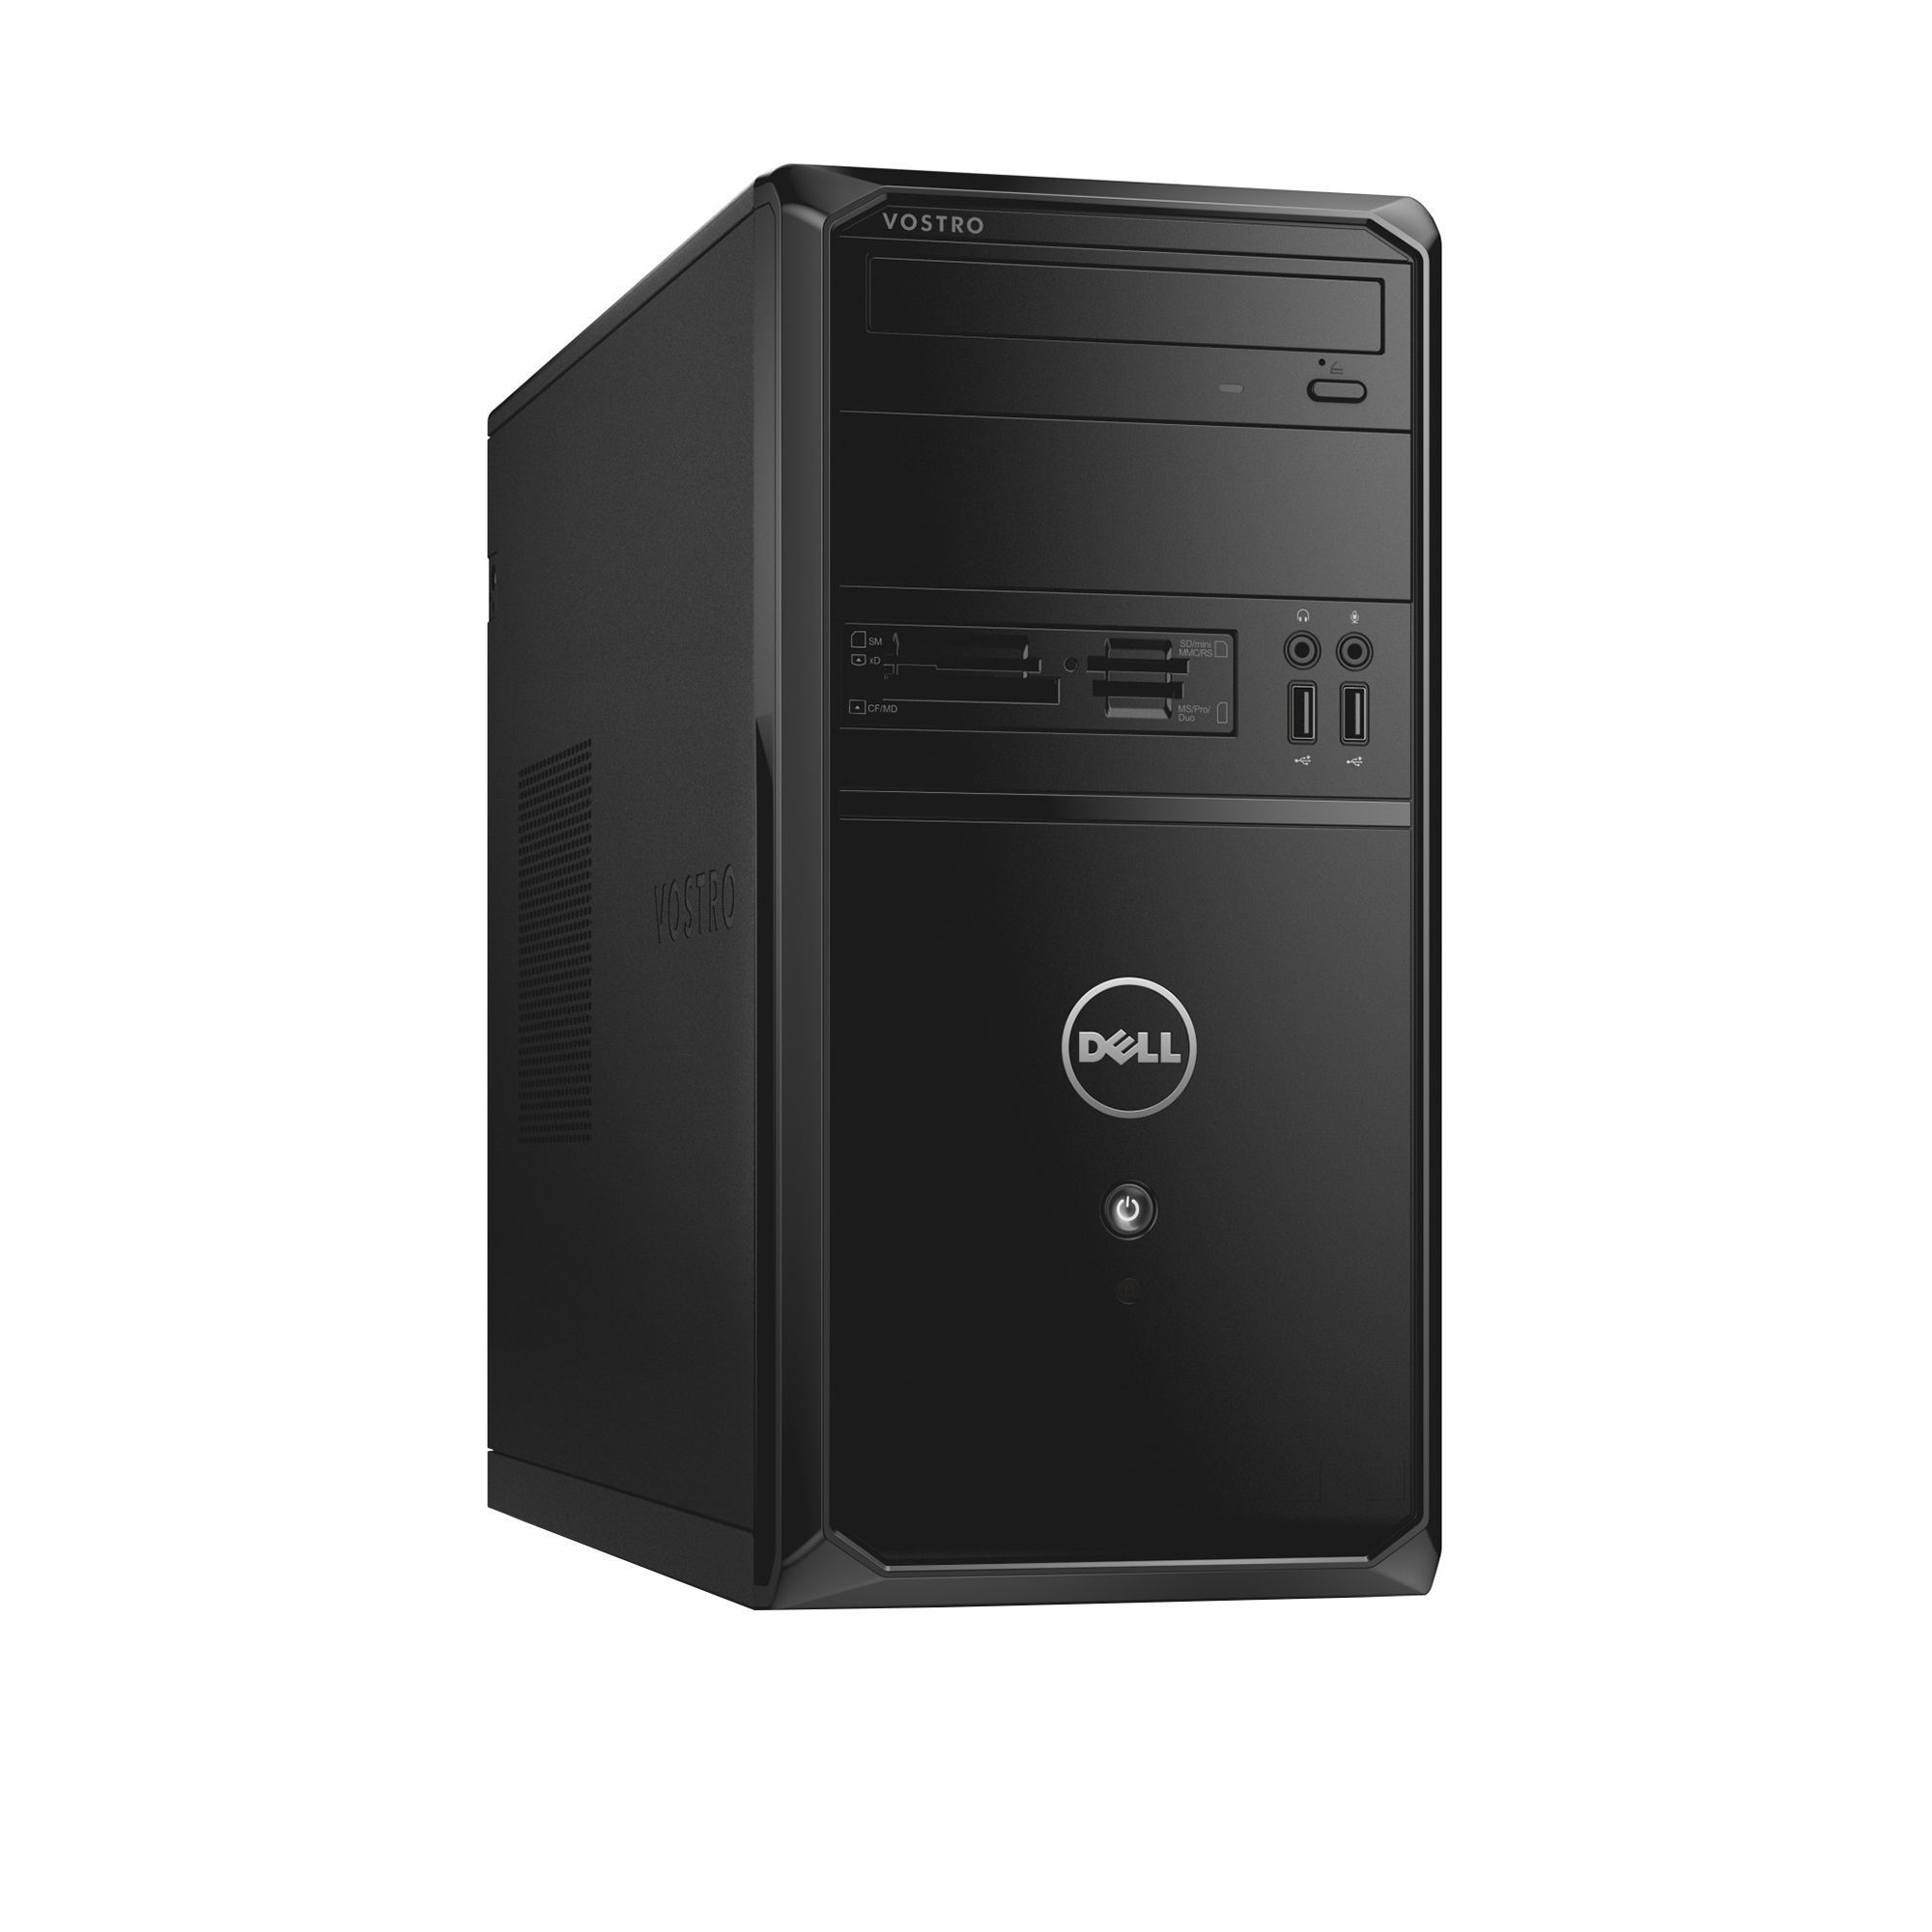  Sistem Desktop PC Dell Vostro 3900 MT, Intel Core i5-4460, 4GB DDR3, HDD 500GB, Intel HD Graphics, WIndows 8.1 Pro 